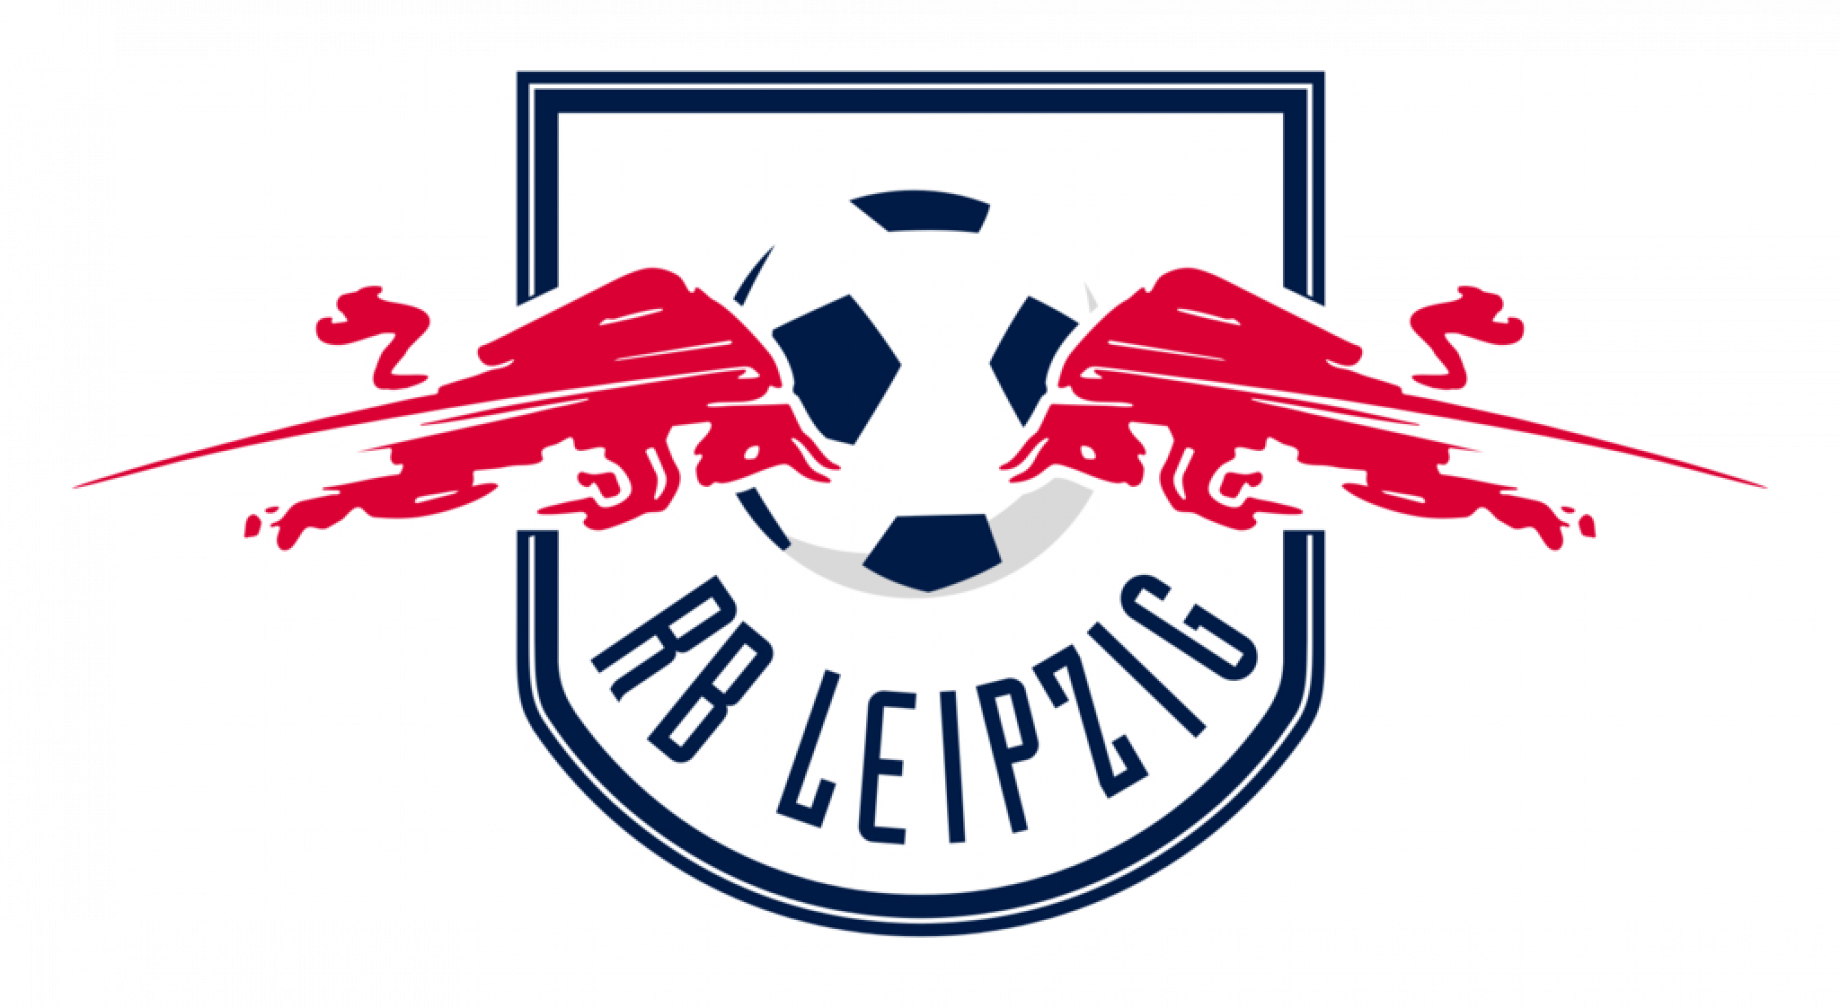 RB_Leipzig_2014_logo.png